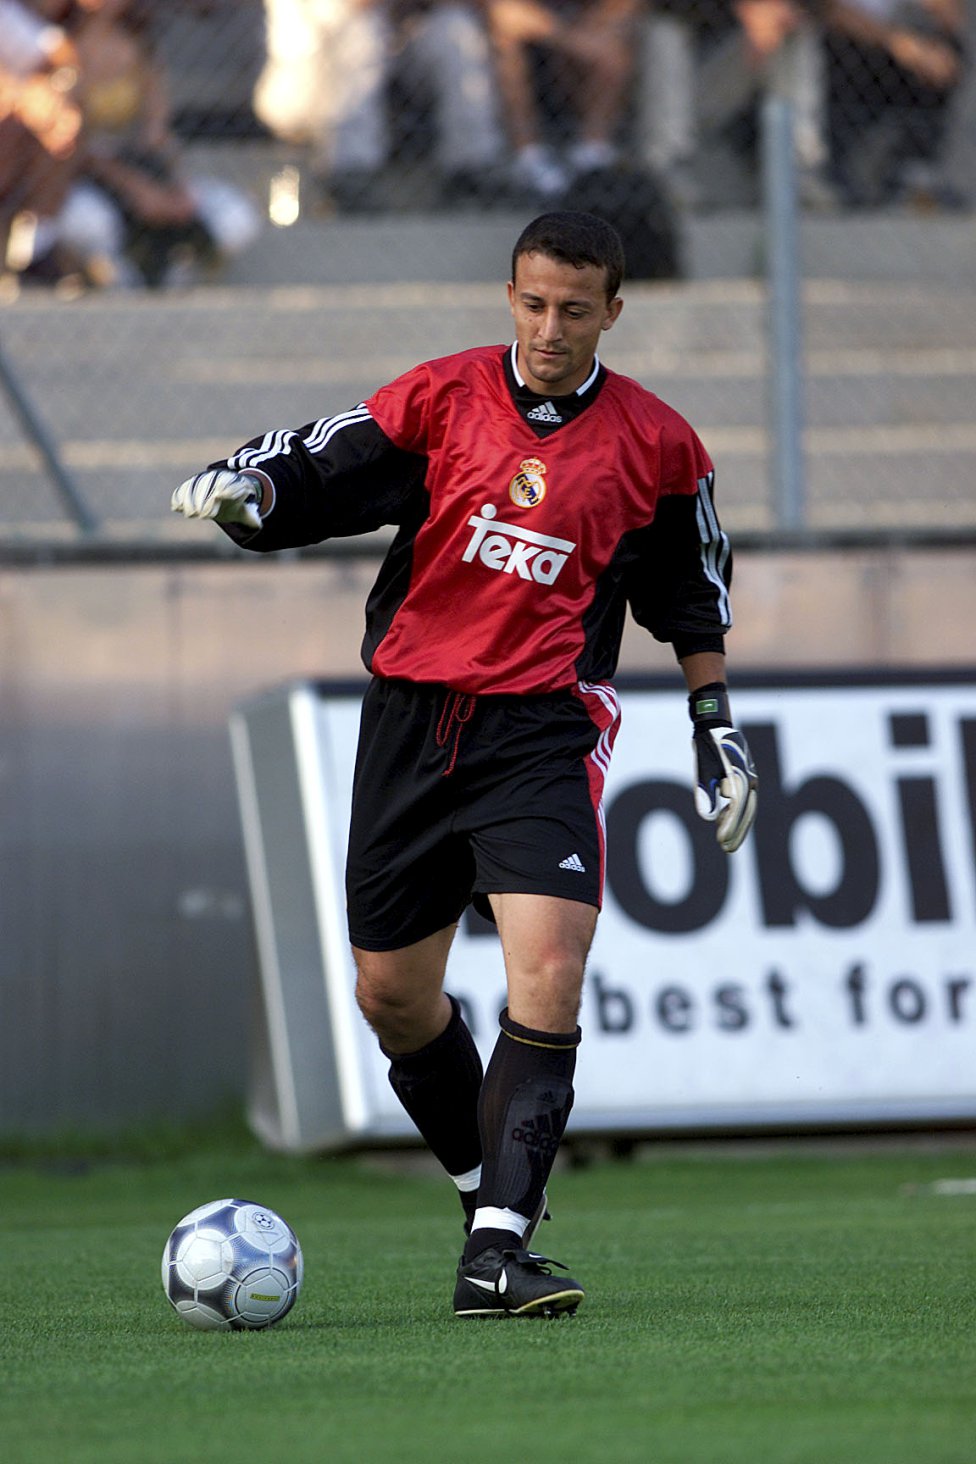 César Sánchez Jugó en el Real Madrid desde 2000 hasta 2005. Vistió la camiseta del Villarreal la temporada 2011-12. 